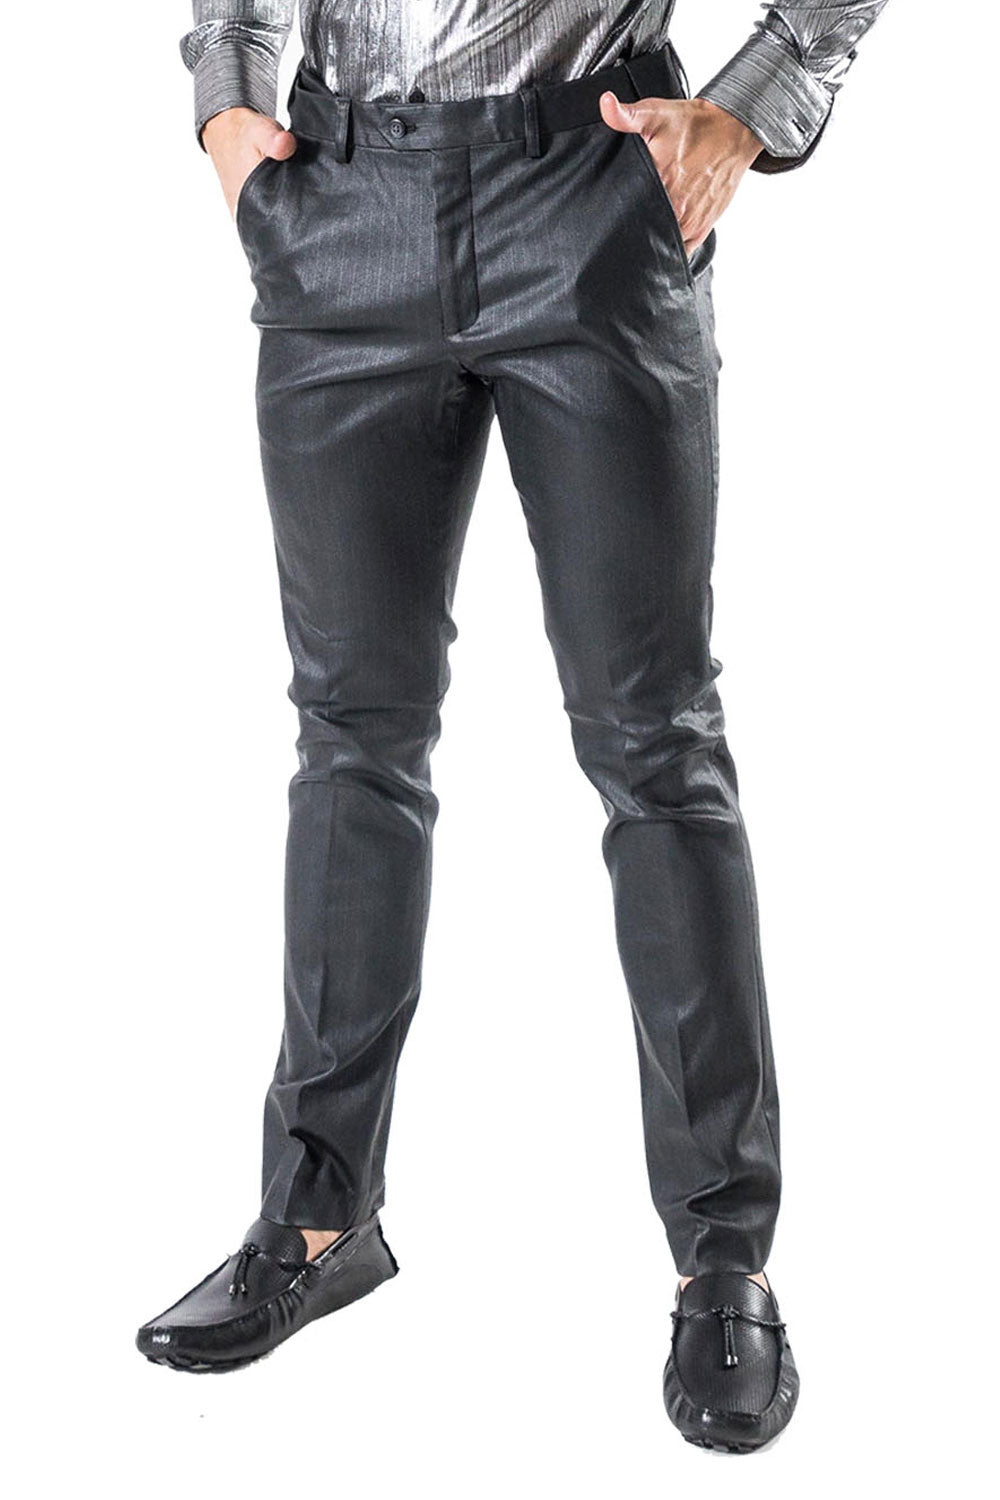 BARABAS Men's Shiny Black Chino Pants CP012